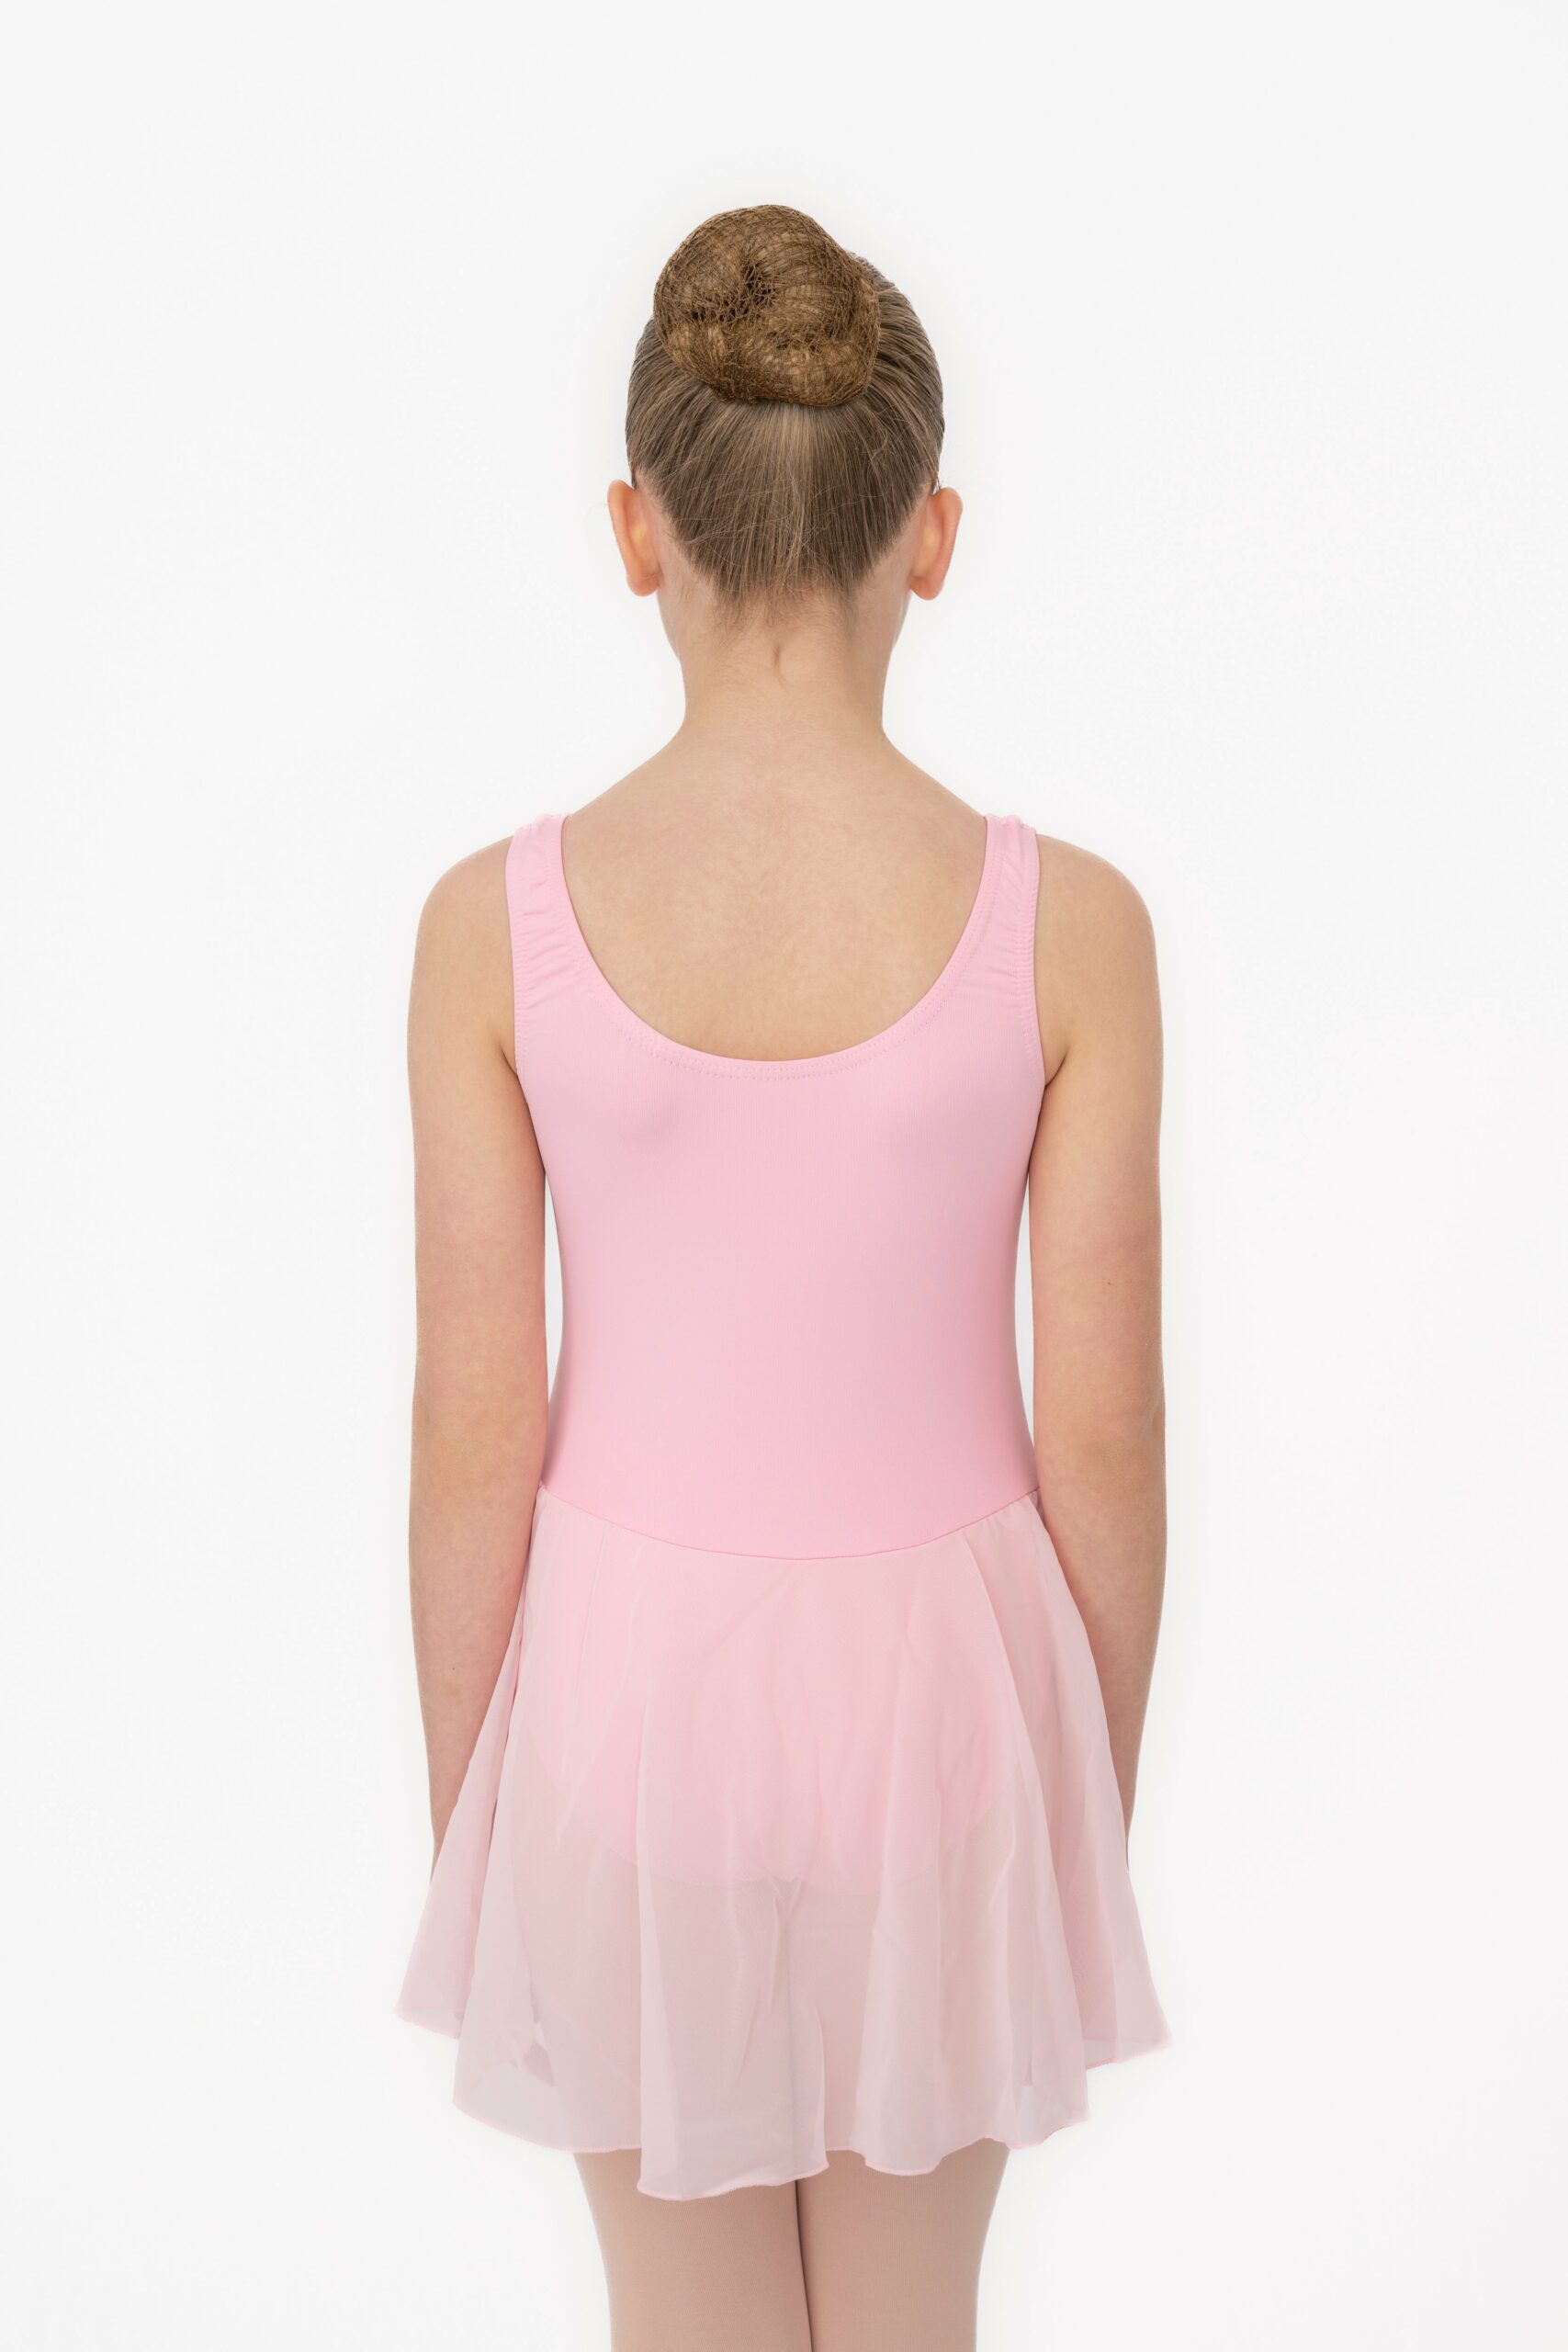 Roch Valley RVRebecca ballet/Dance leotard with attached skirt